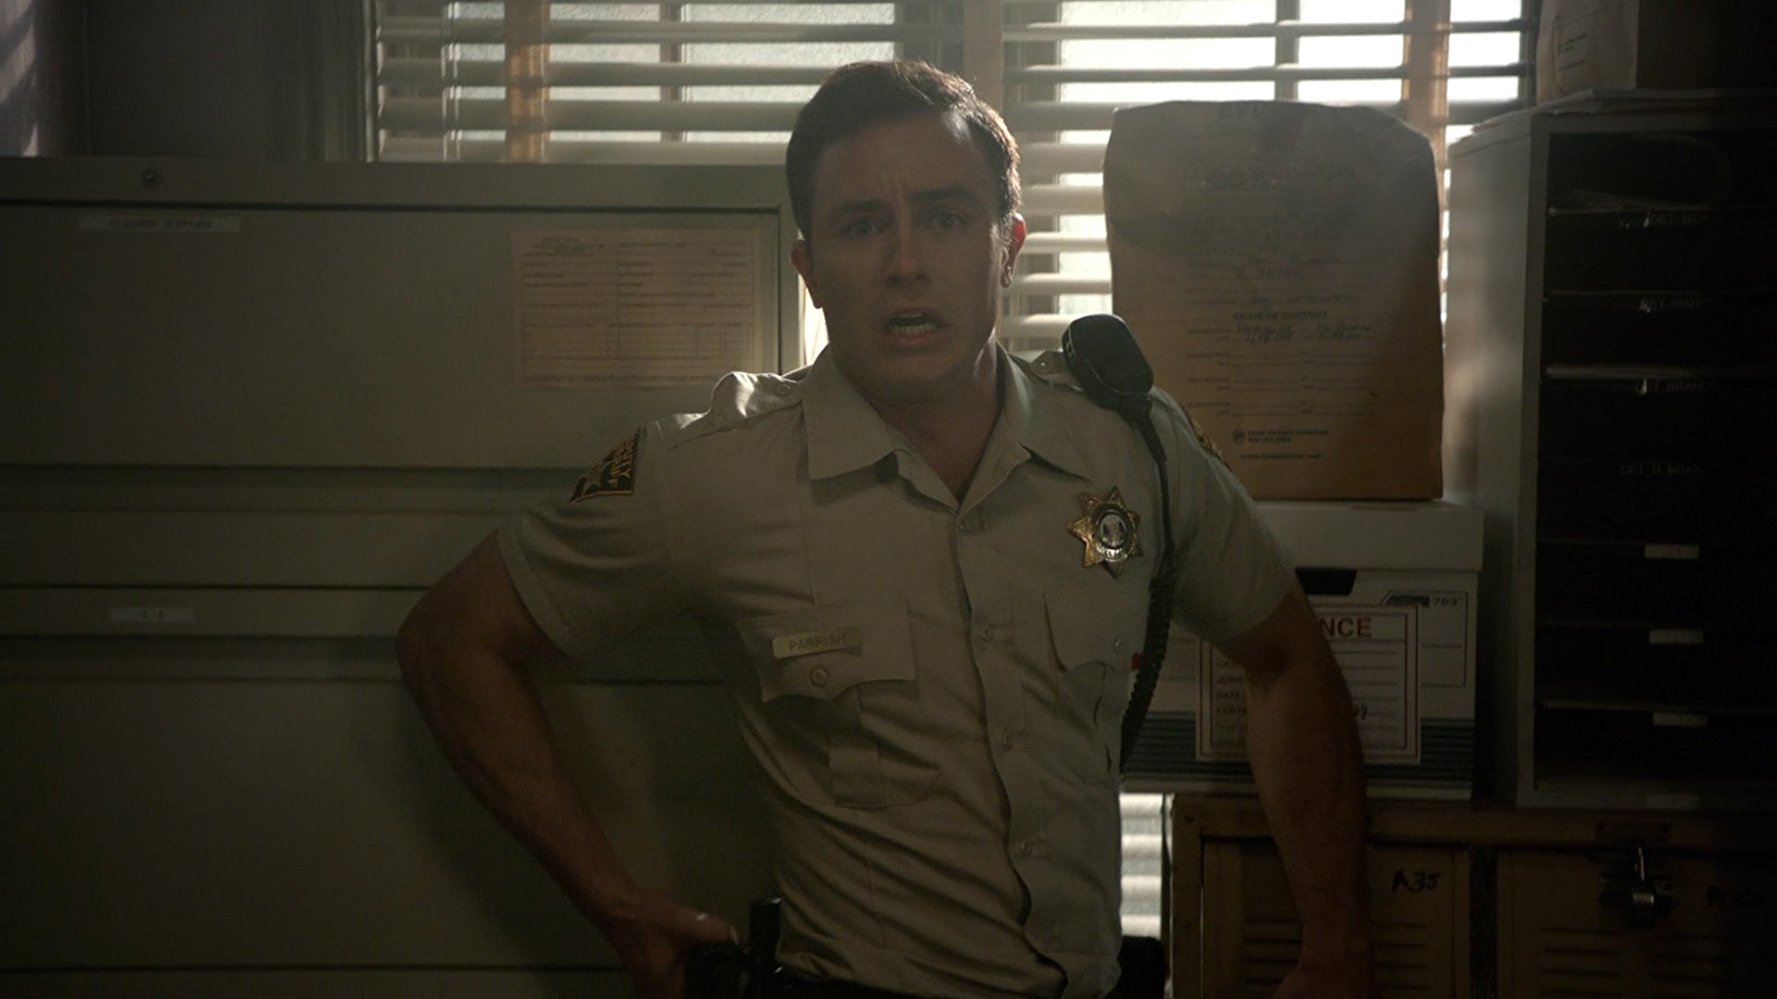 Deputy Parrish